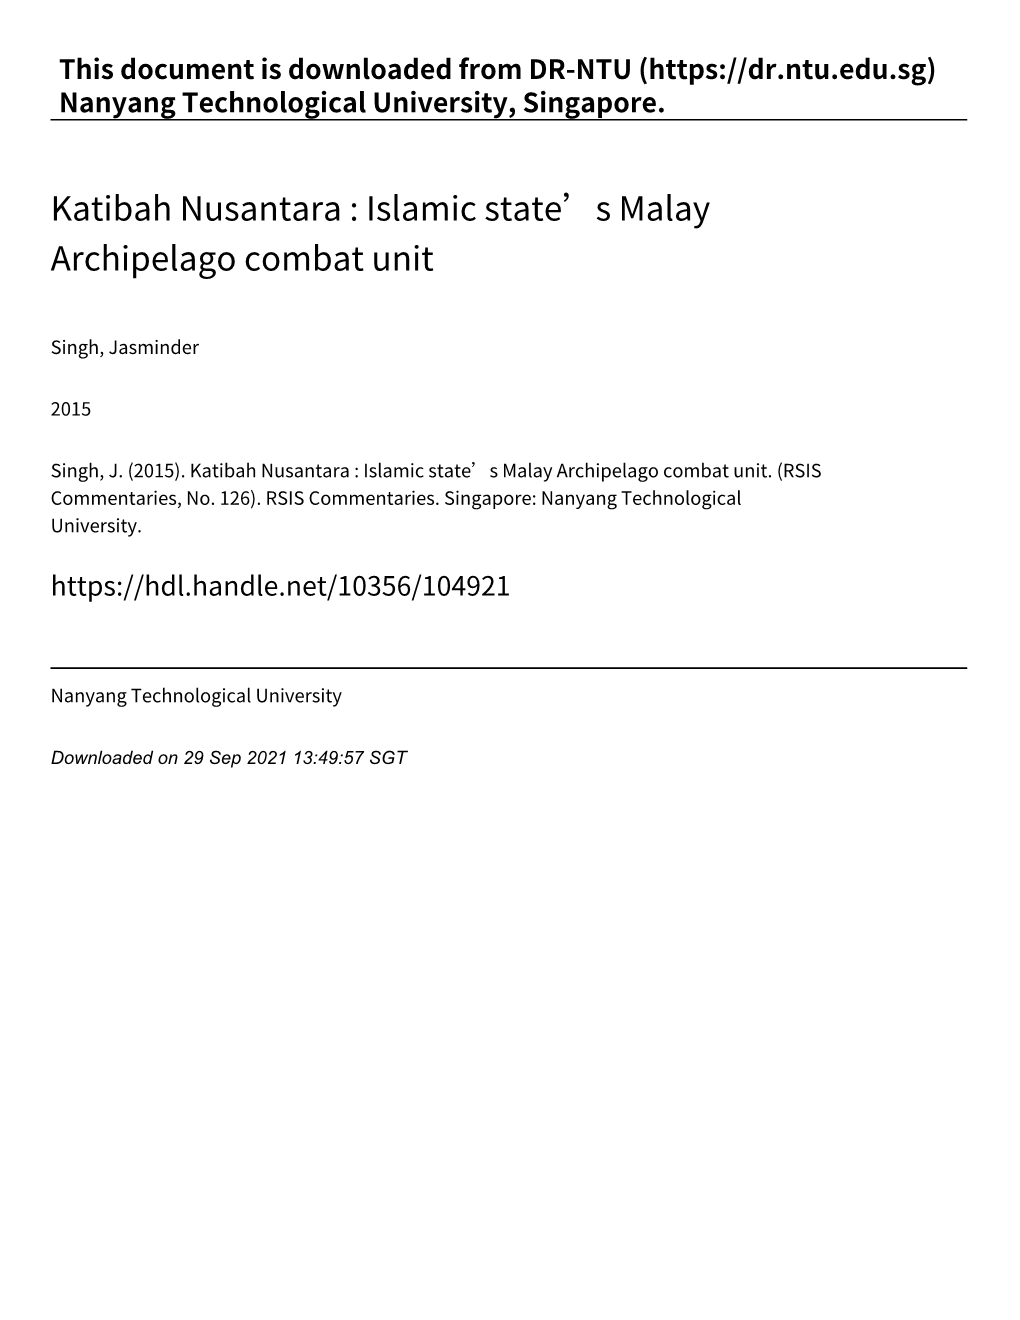 Katibah Nusantara : Islamic State's Malay Archipelago Combat Unit